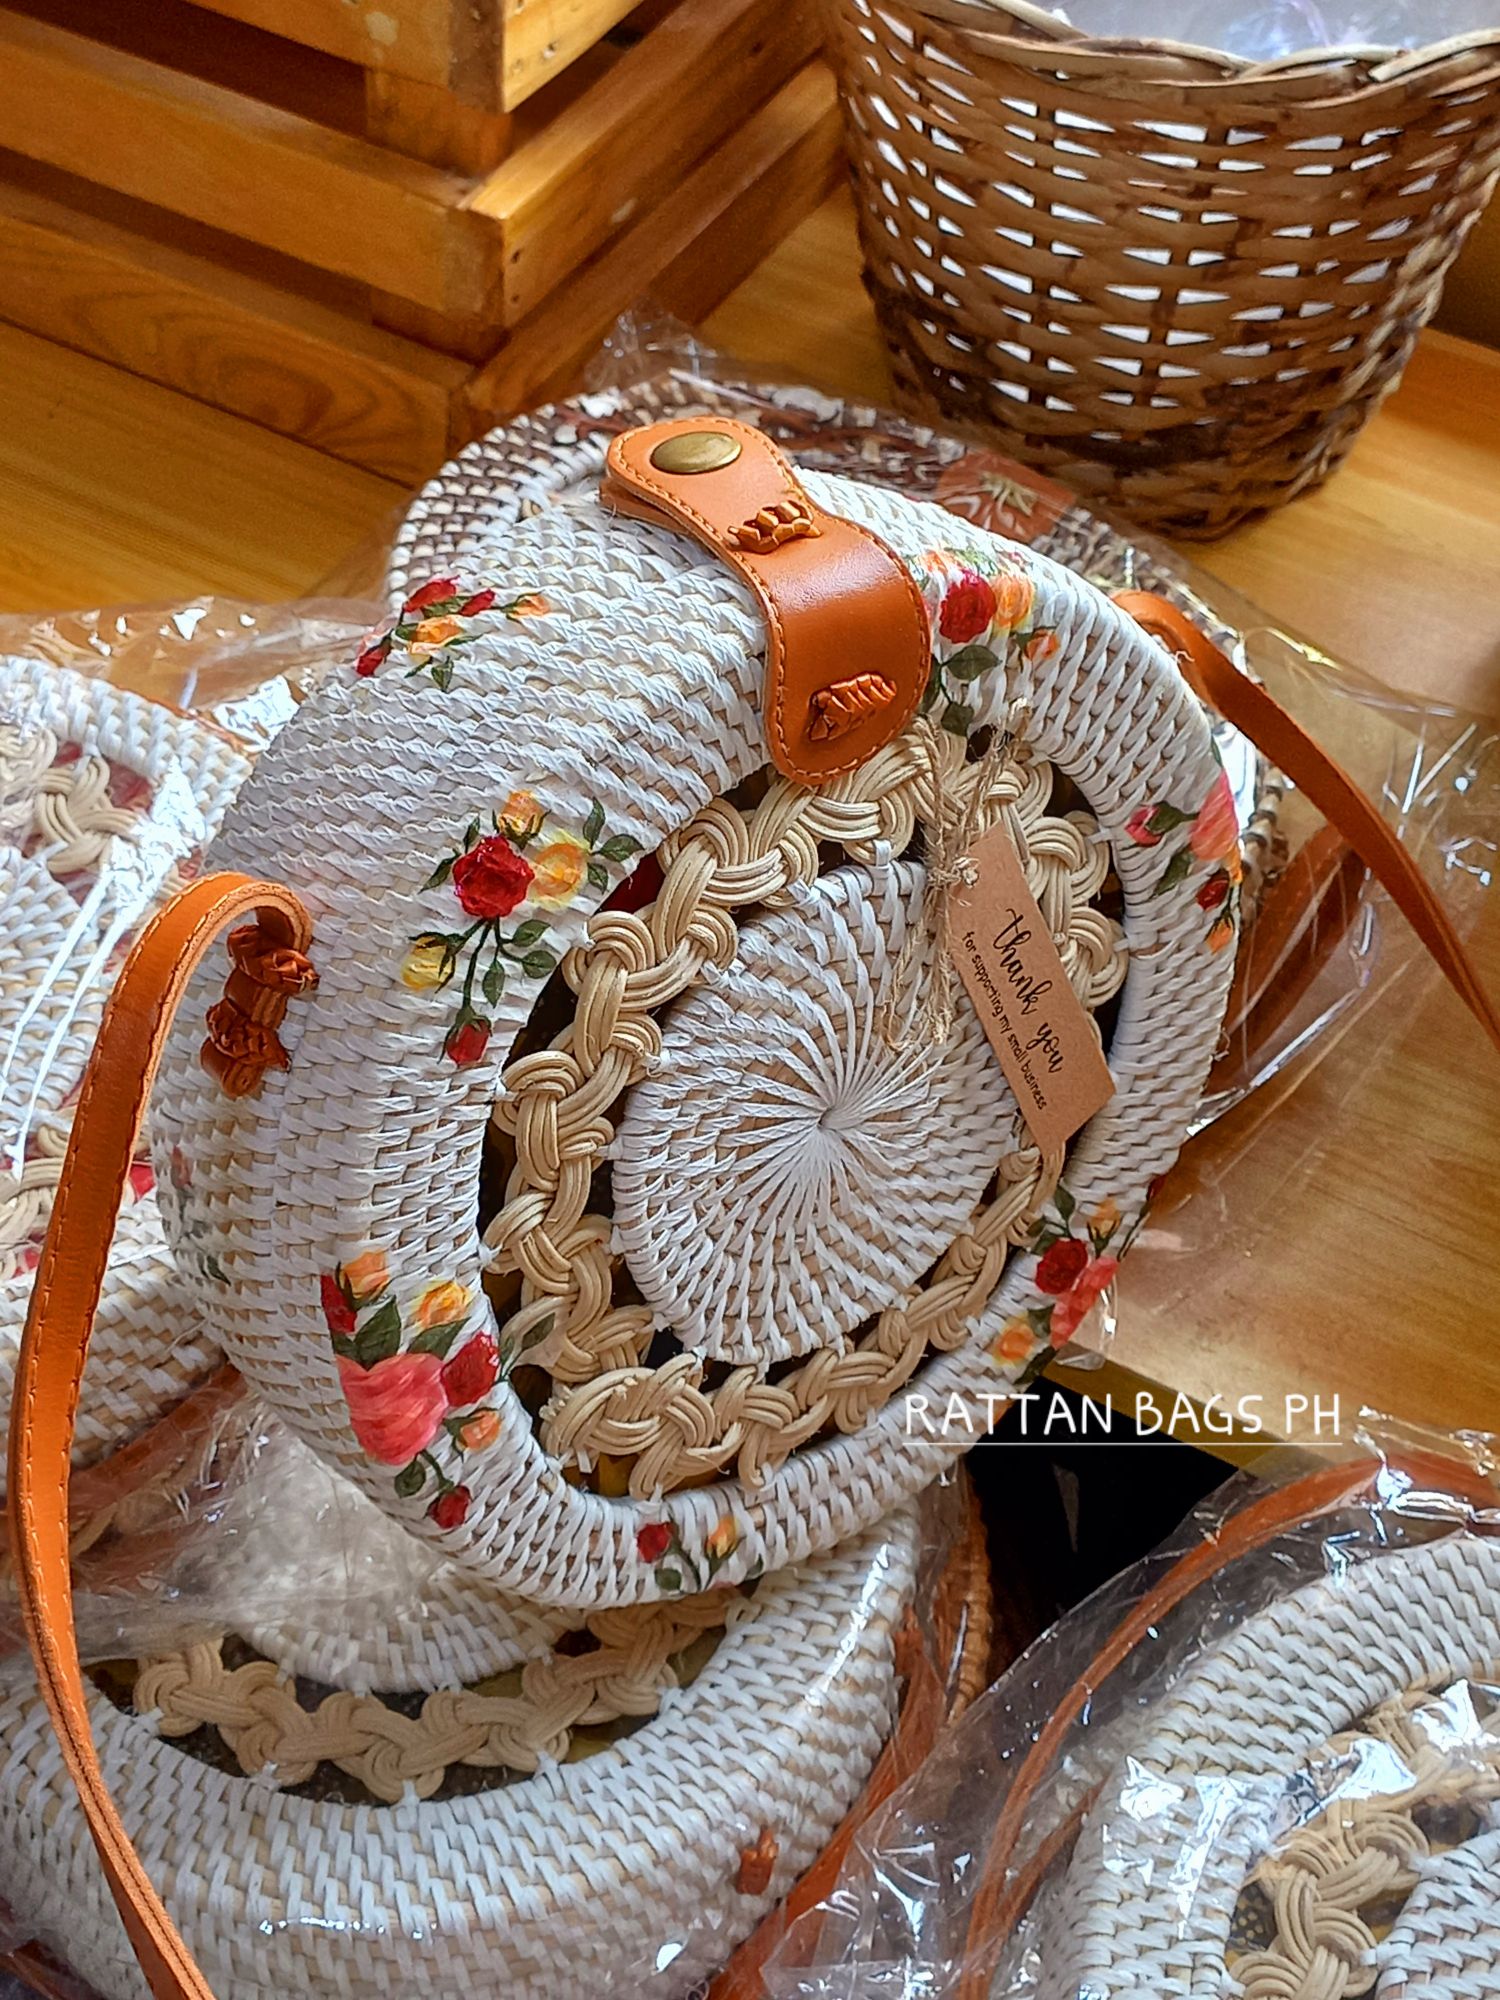 circle rattan sling bags white decoration flower